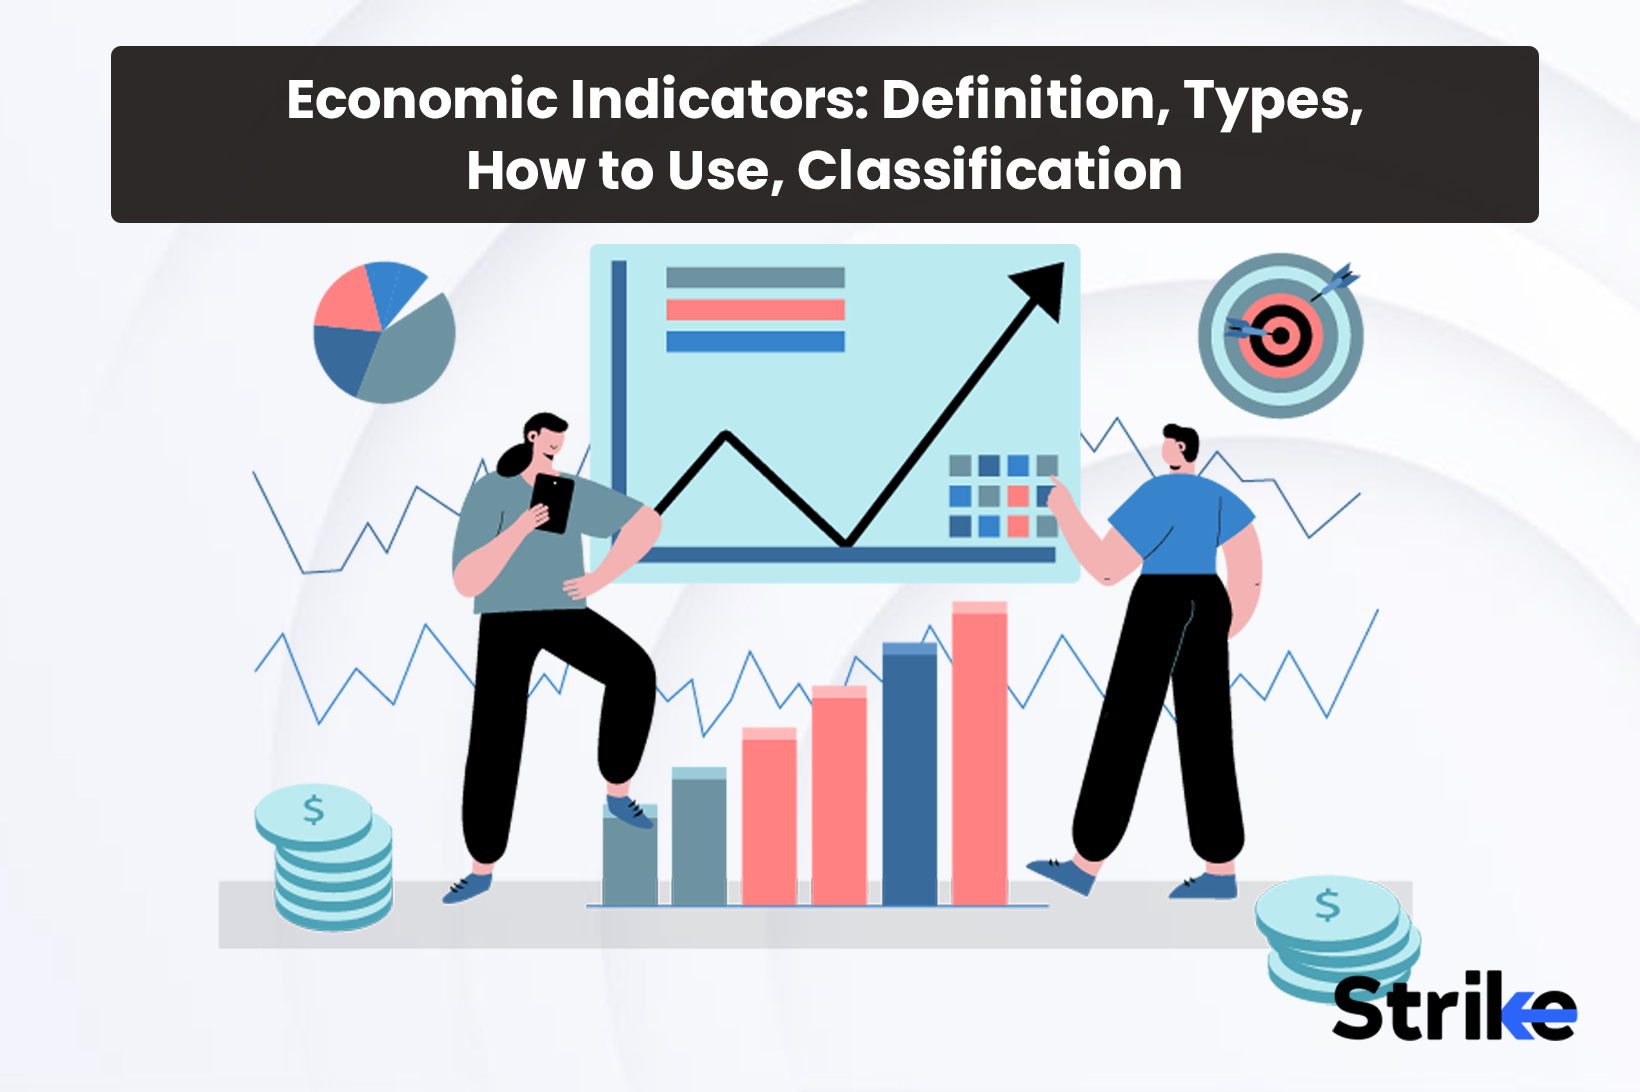 Economic Indicators: Definition, Types, How to Use